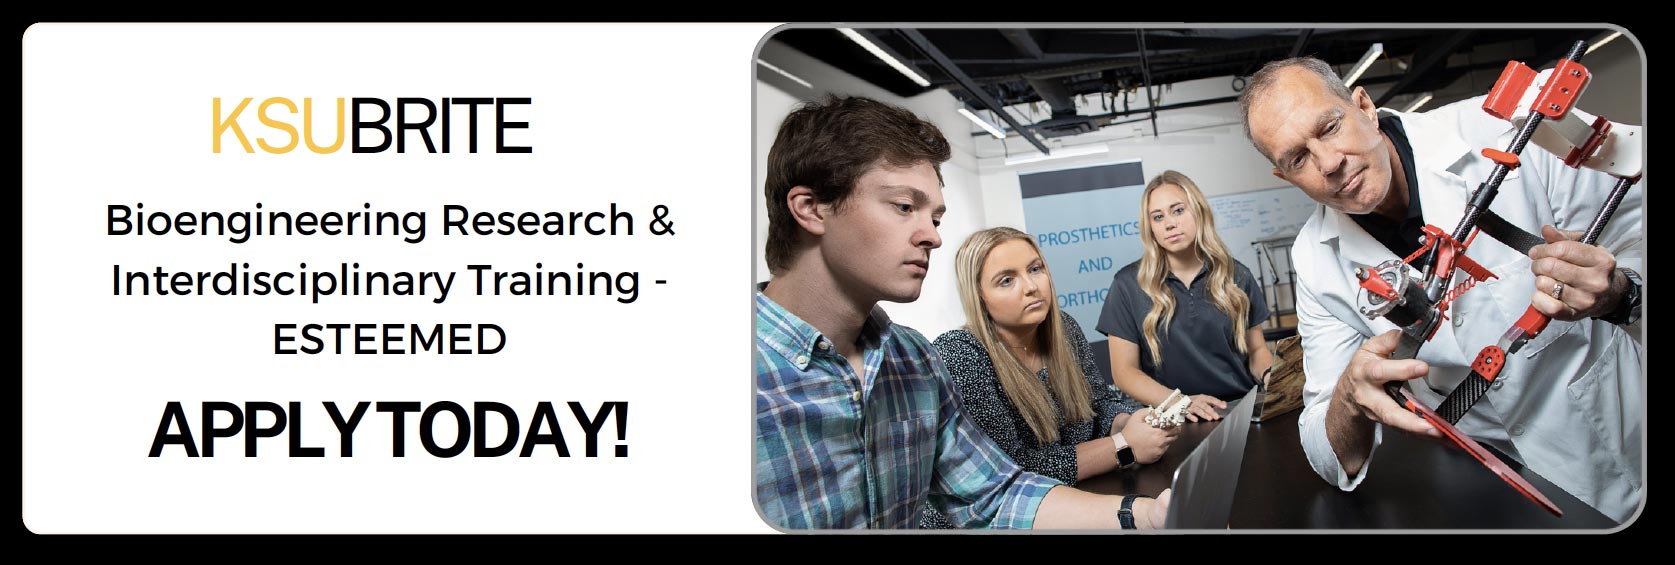 KSUBRITE Bioengineering Research & Interdisciplinary Training - ESTEEMED Apply Today!